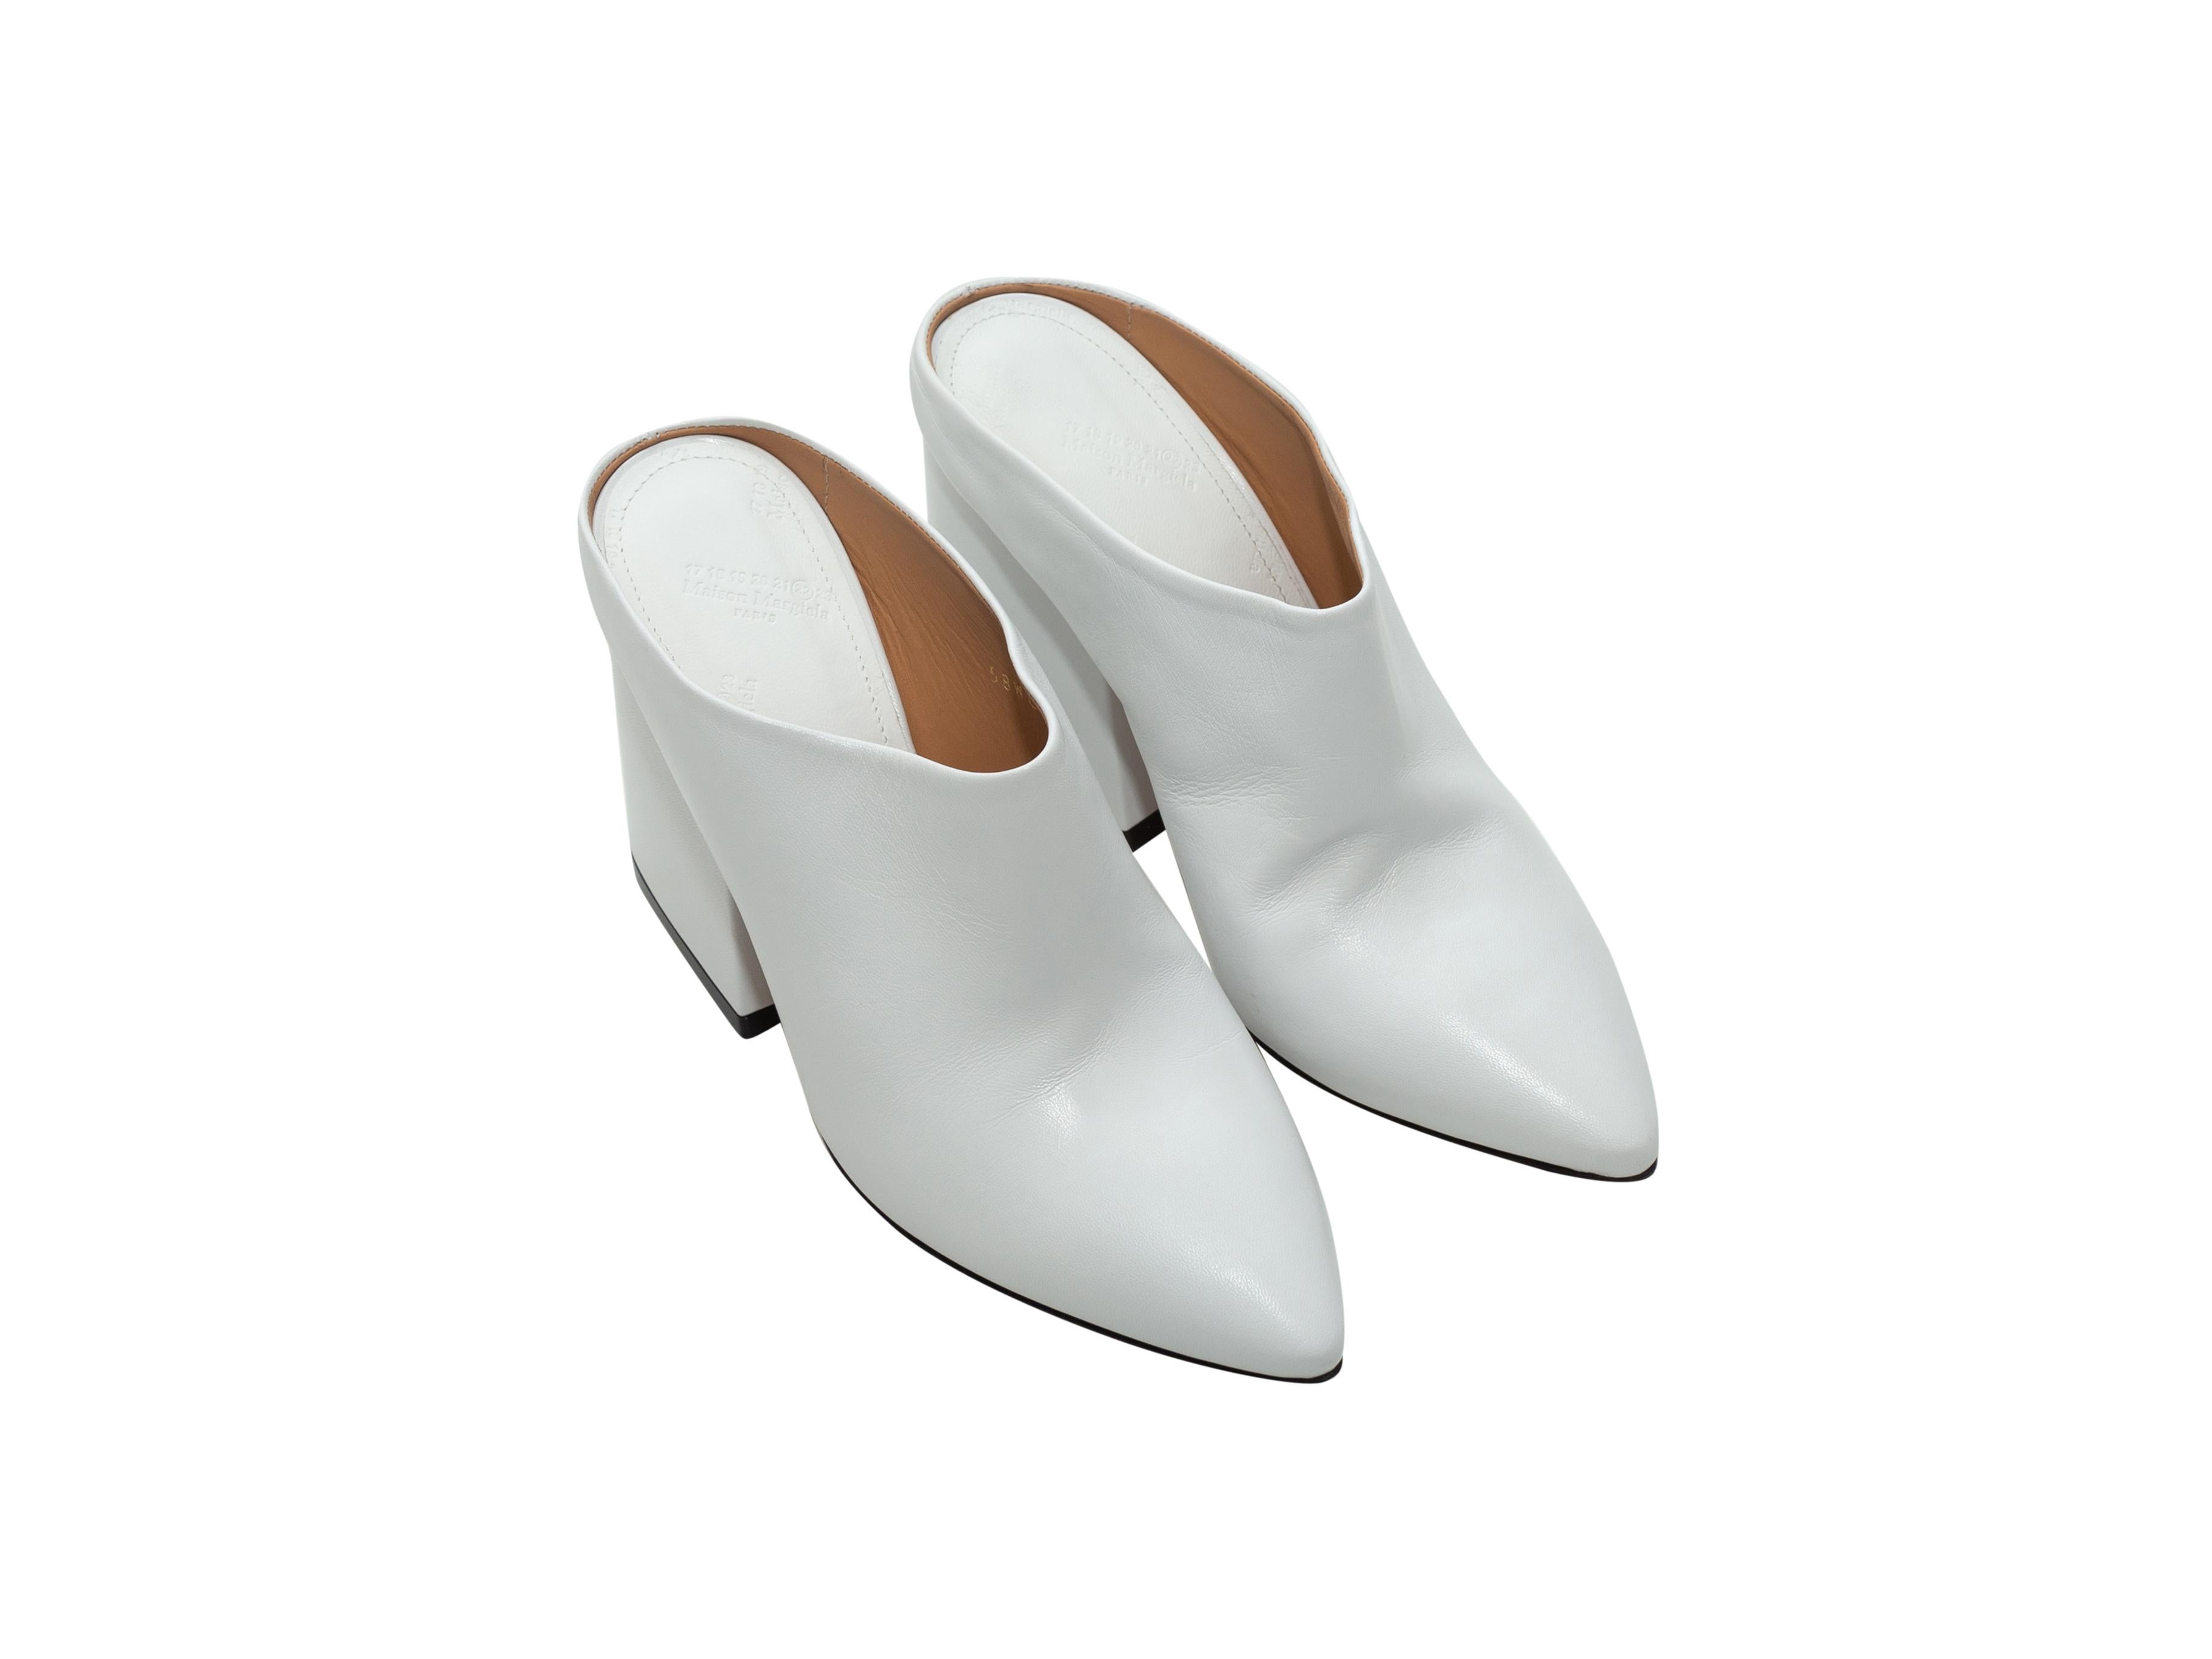 Product details: White pointed-toe leather mules by Maison Margiela. Block heels. Designer size 37. 3.5